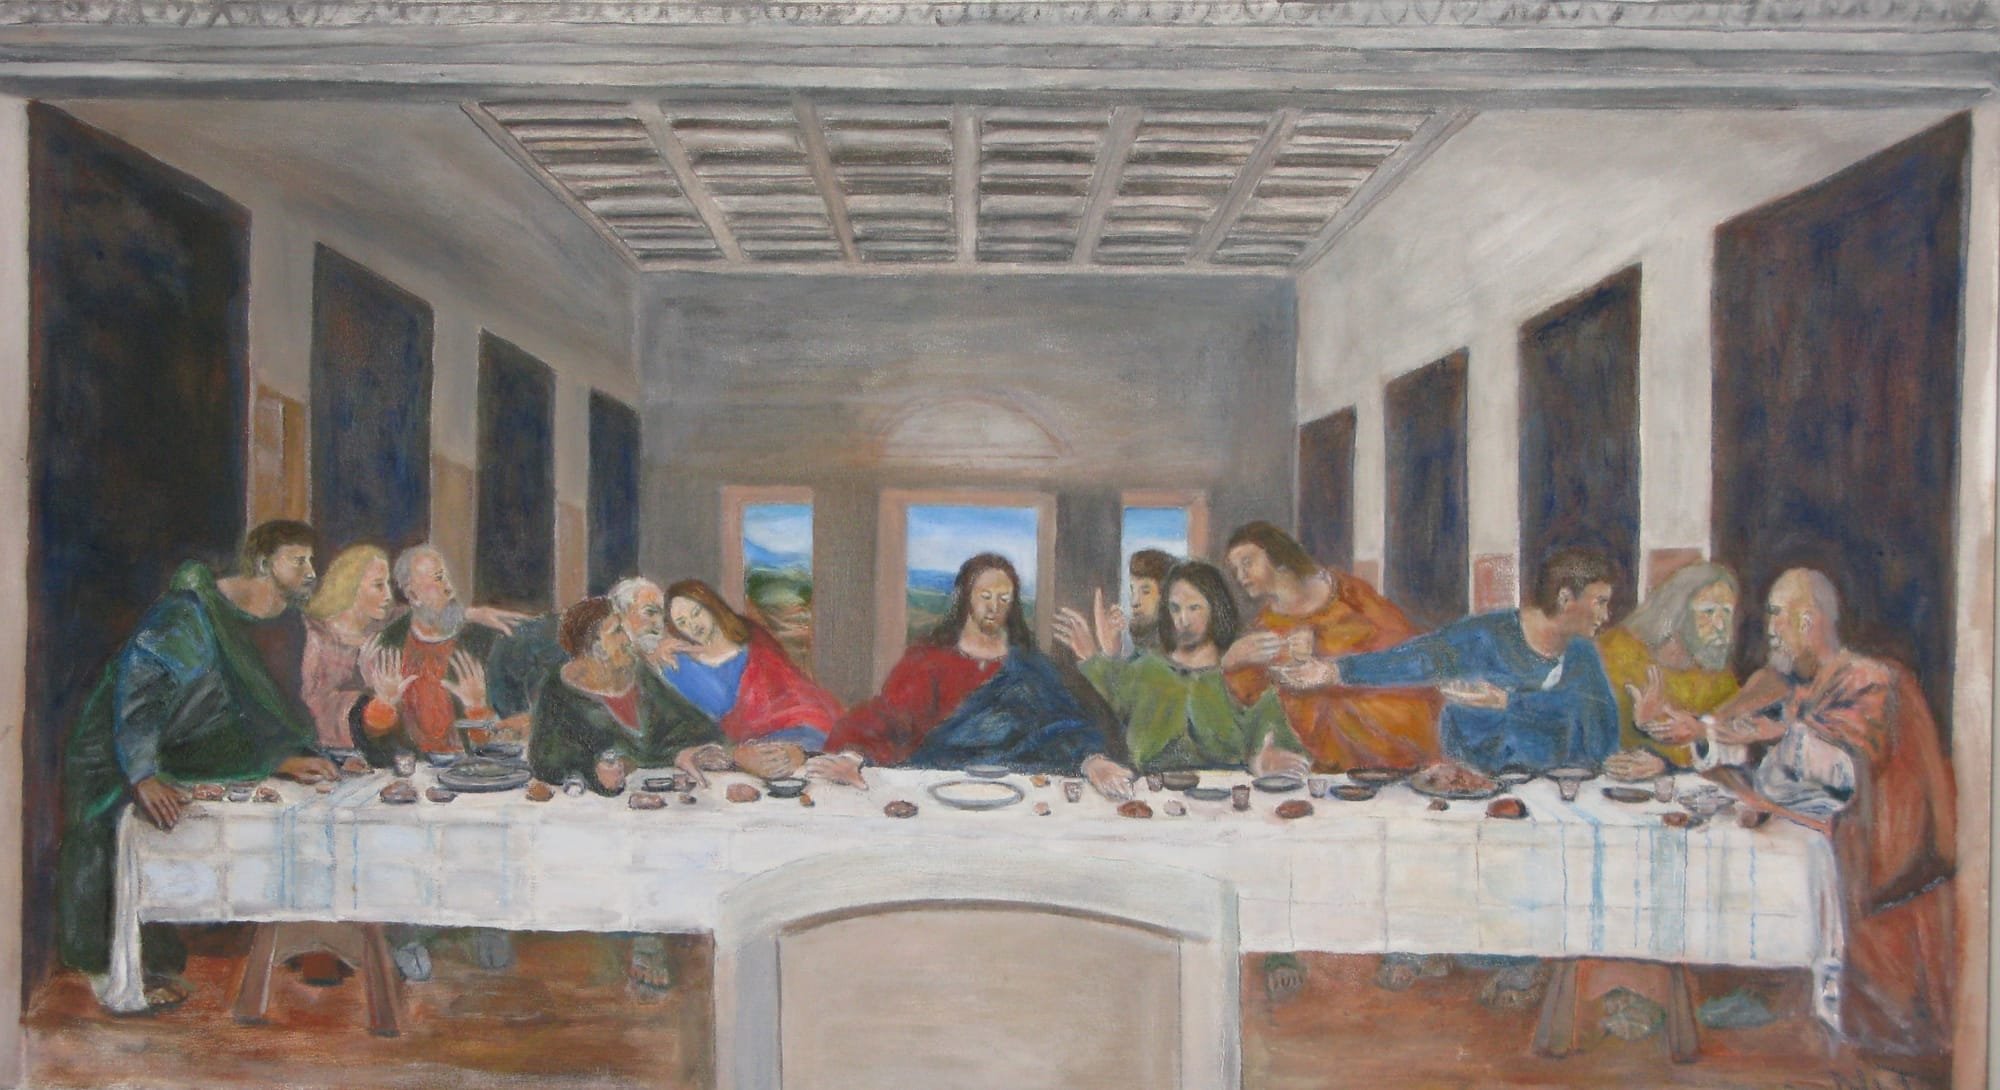 The Last Supper after Leonardo de Vinci